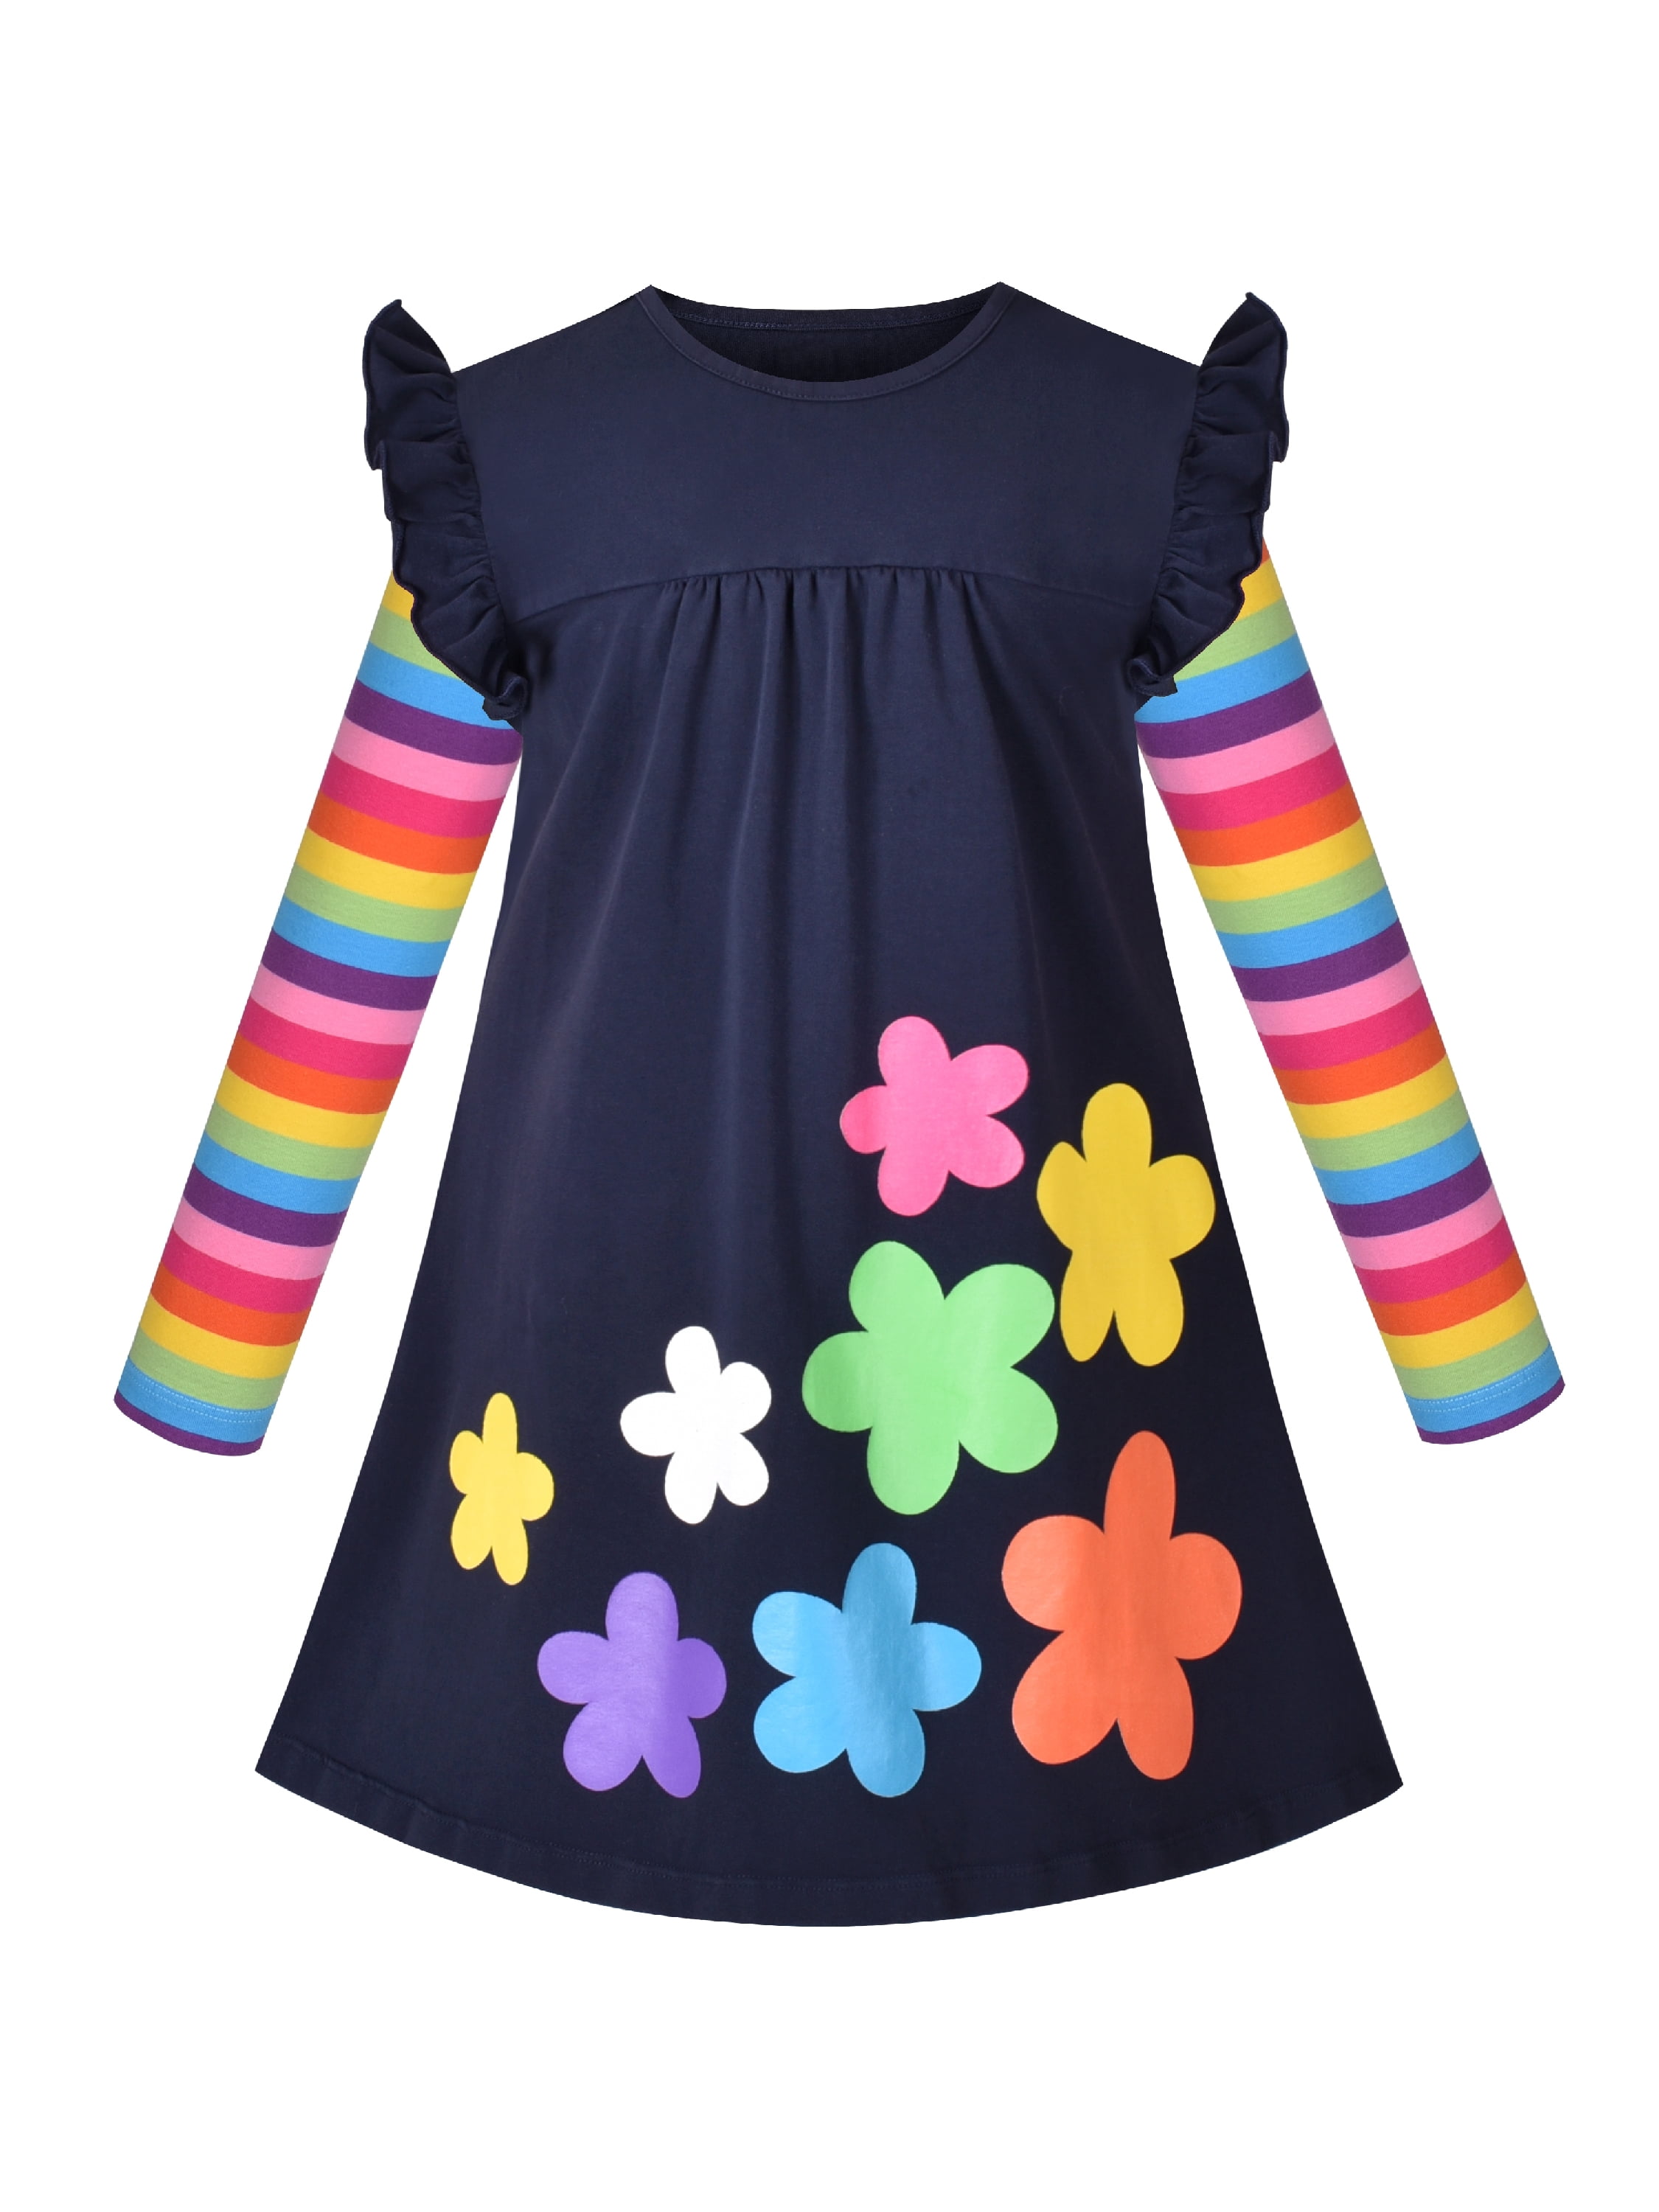 Sunny Fashion Girls Dress Colorful Daisy Flower Rainbow Long Sleeve Cotton